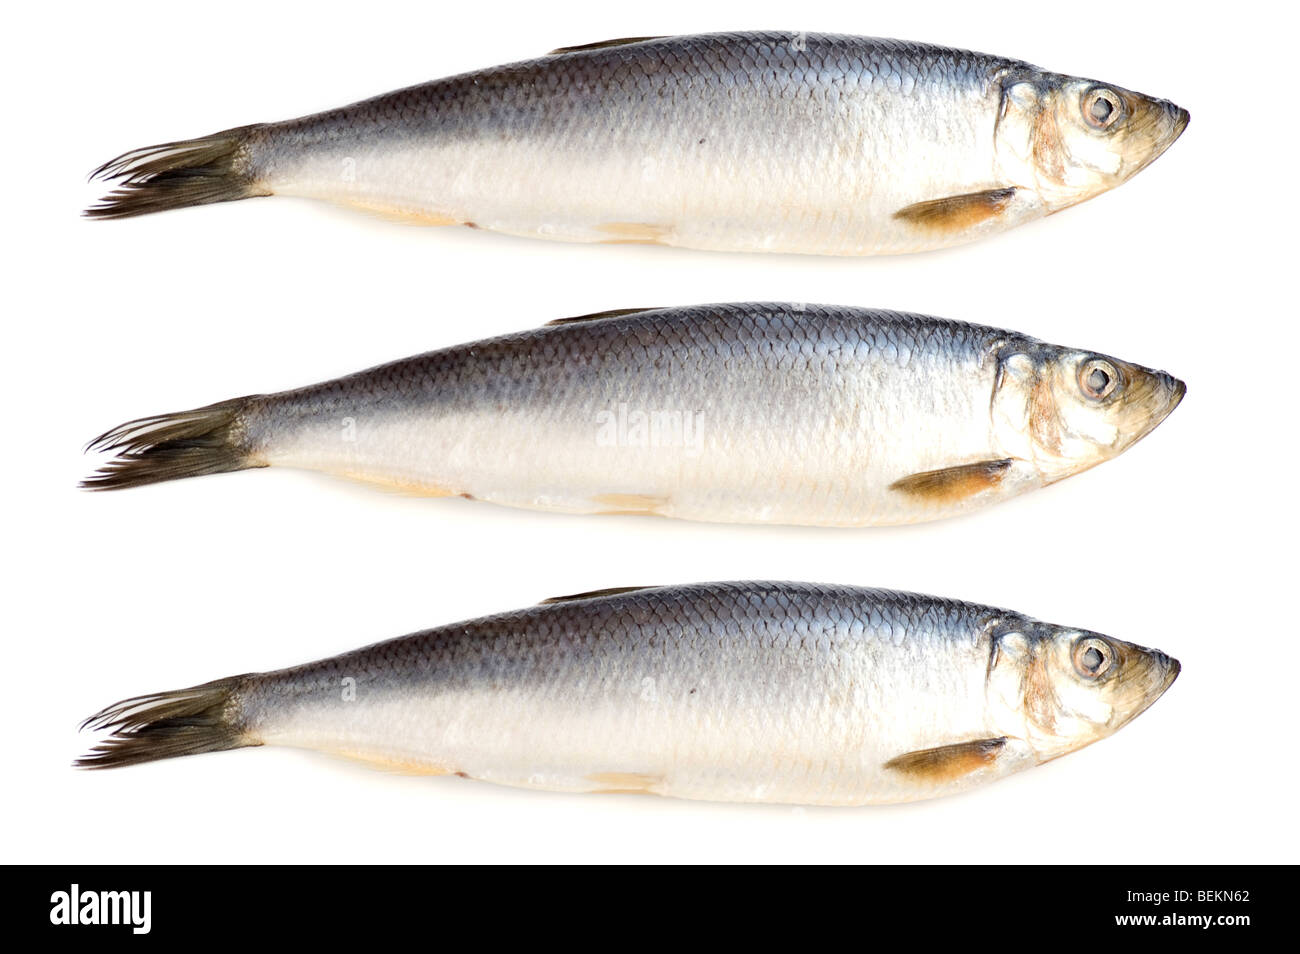 object on white - fish herring close up Stock Photo